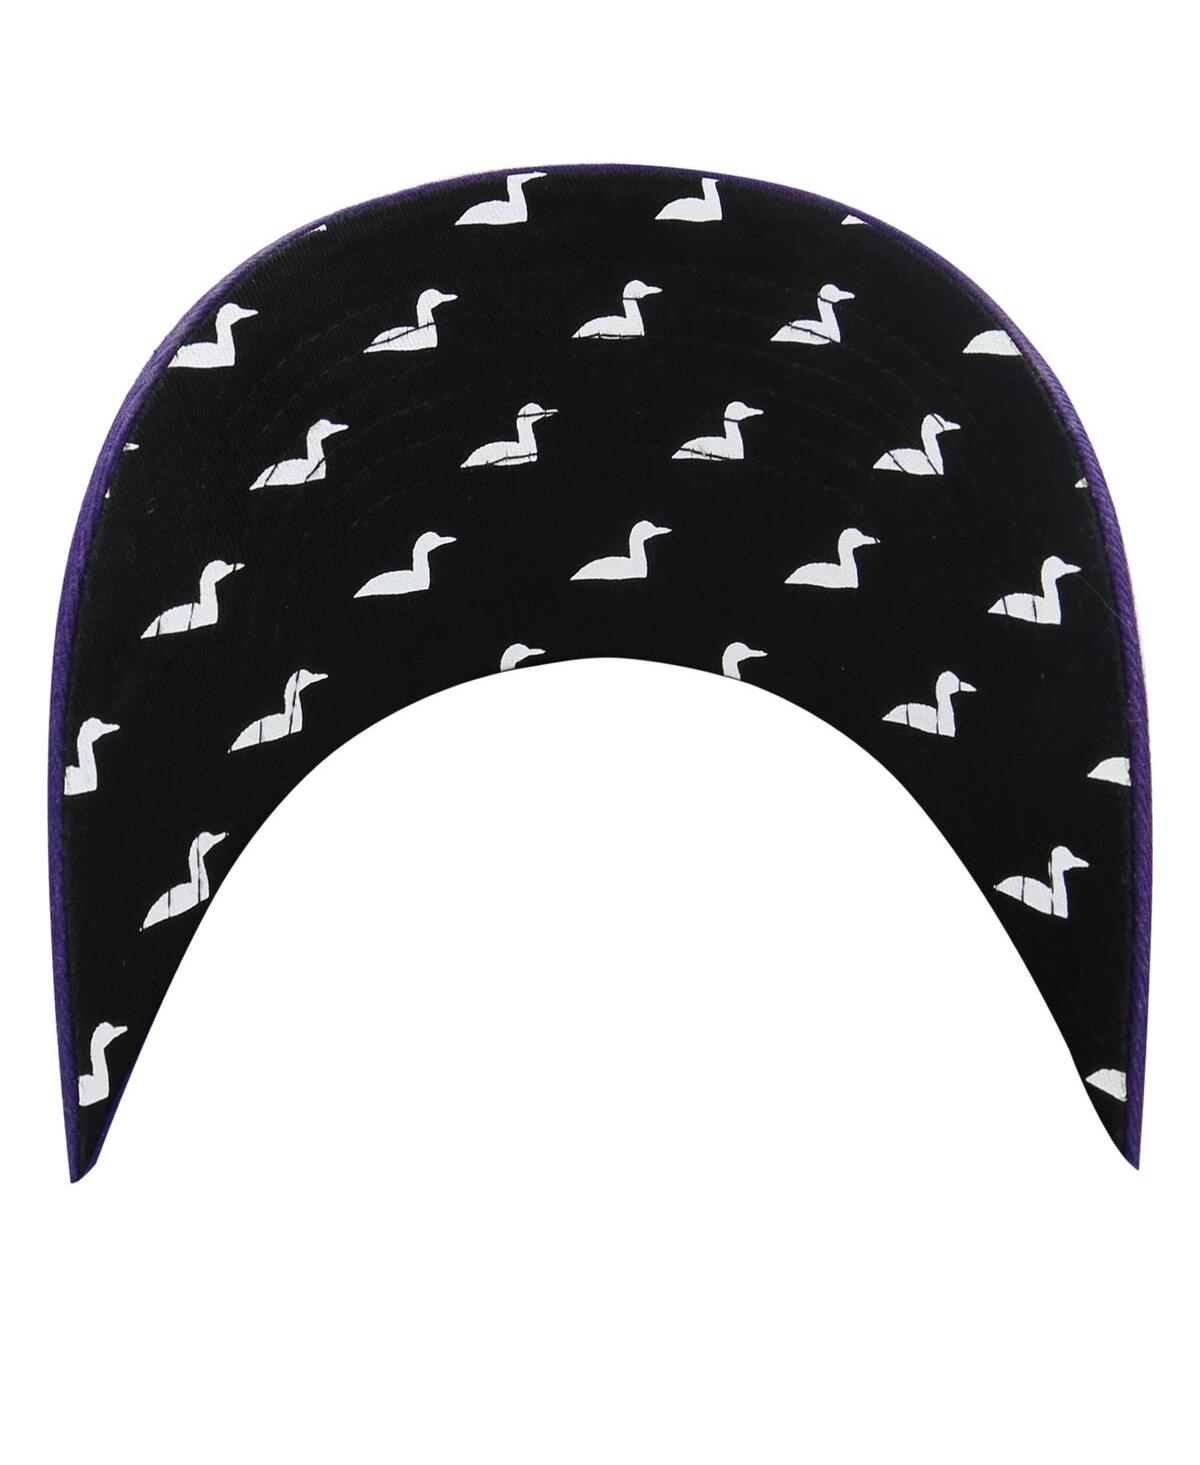 Shop 47 Brand 47 Women's Purple Minnesota Vikings Confetti Icon Clean Up Adjustable Hat